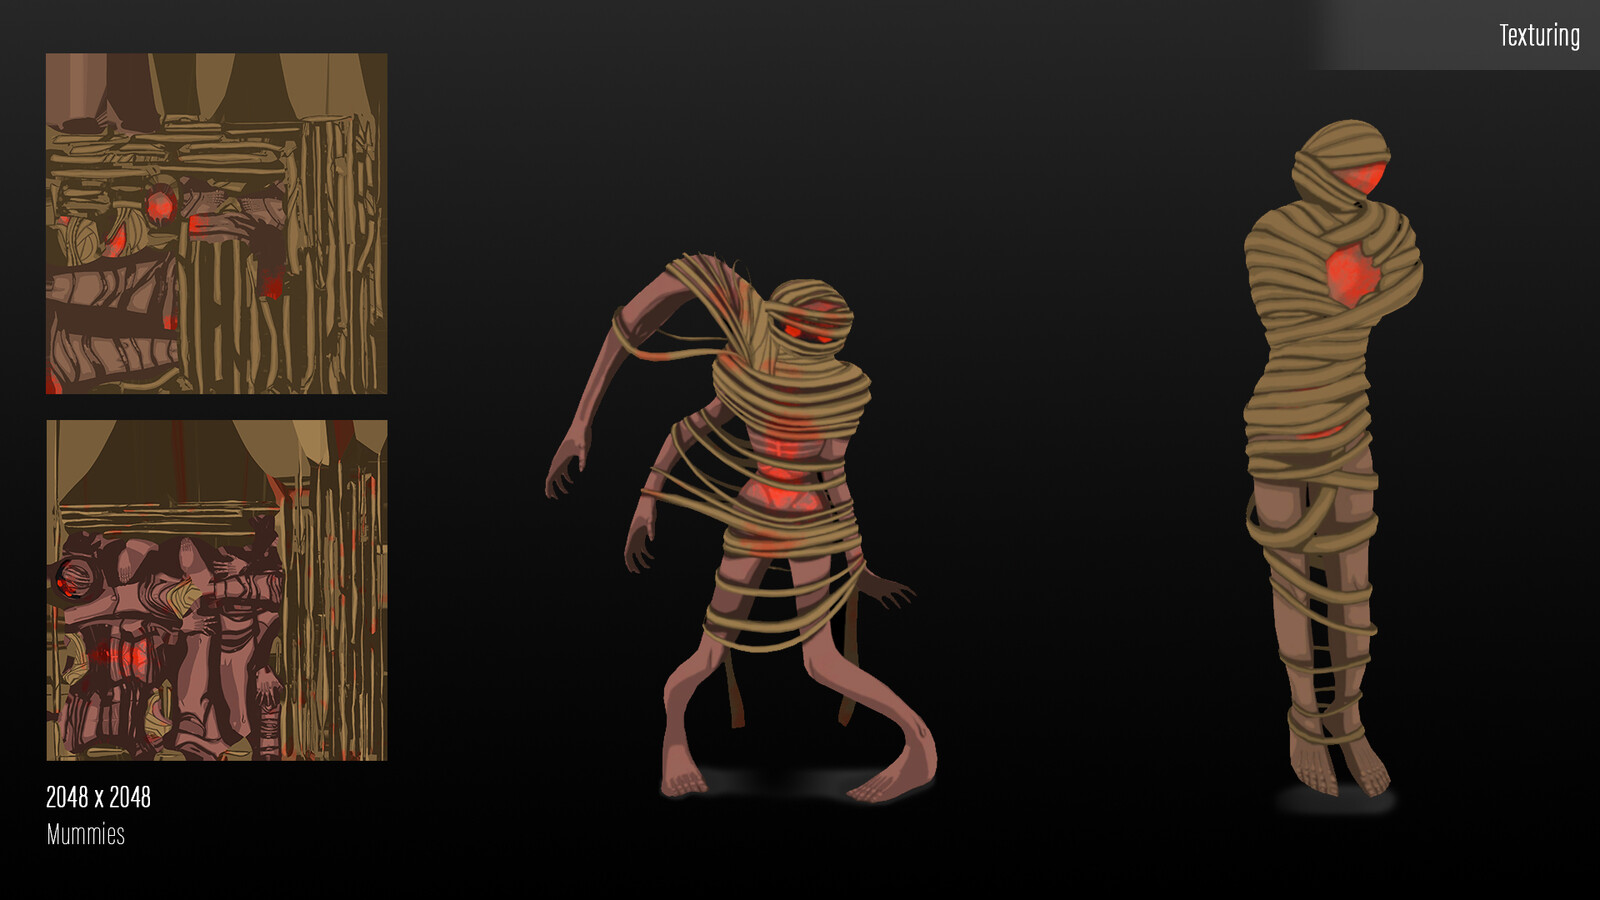 Texturing of 2 mummies
Modelling by Elizaveta